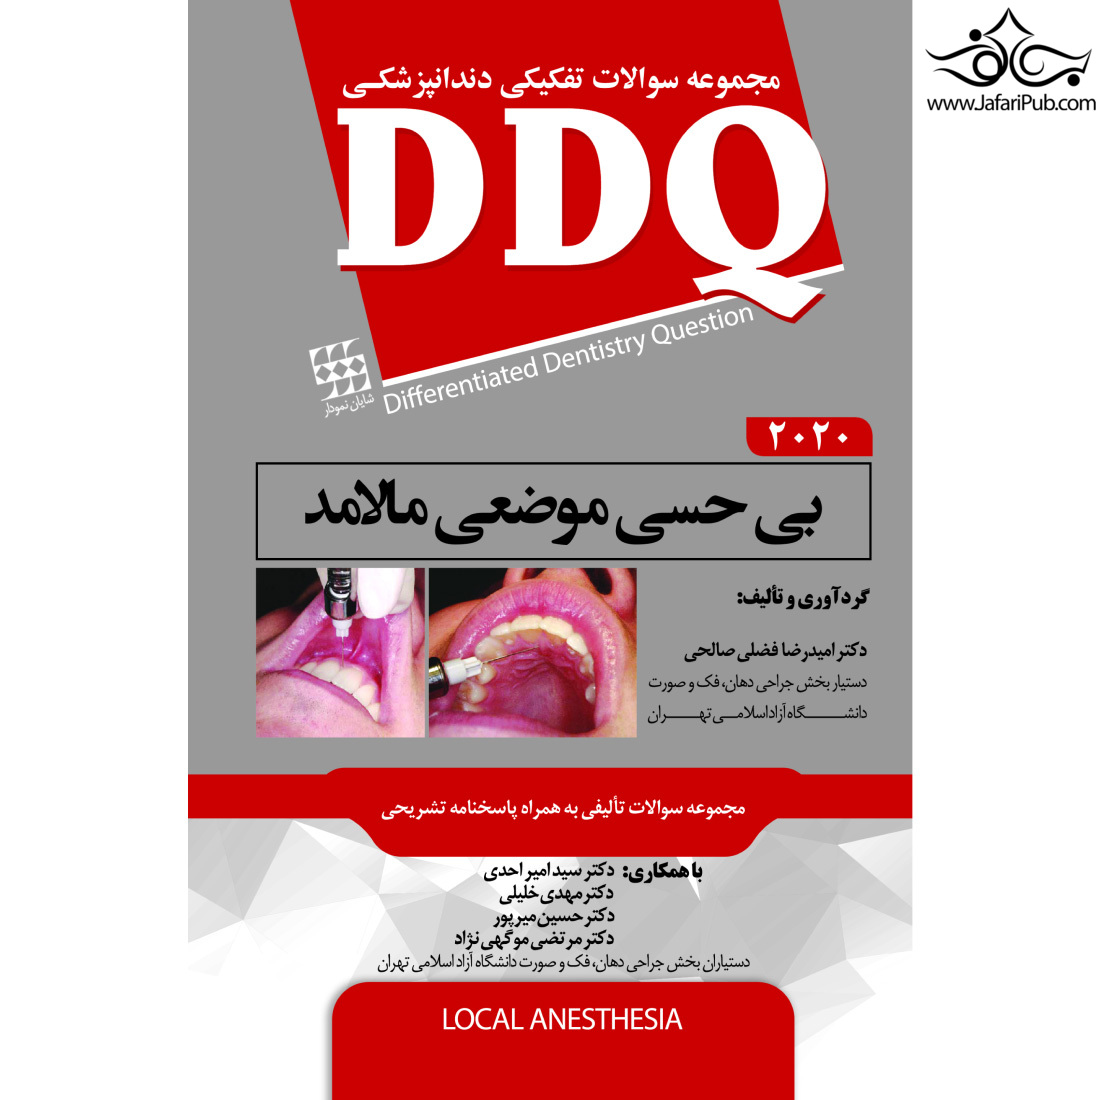 DDQ مجموعه سوالات تفکیکی دندانپزشکی بی حسی موضعی مالامد 2020 شایان نمودار